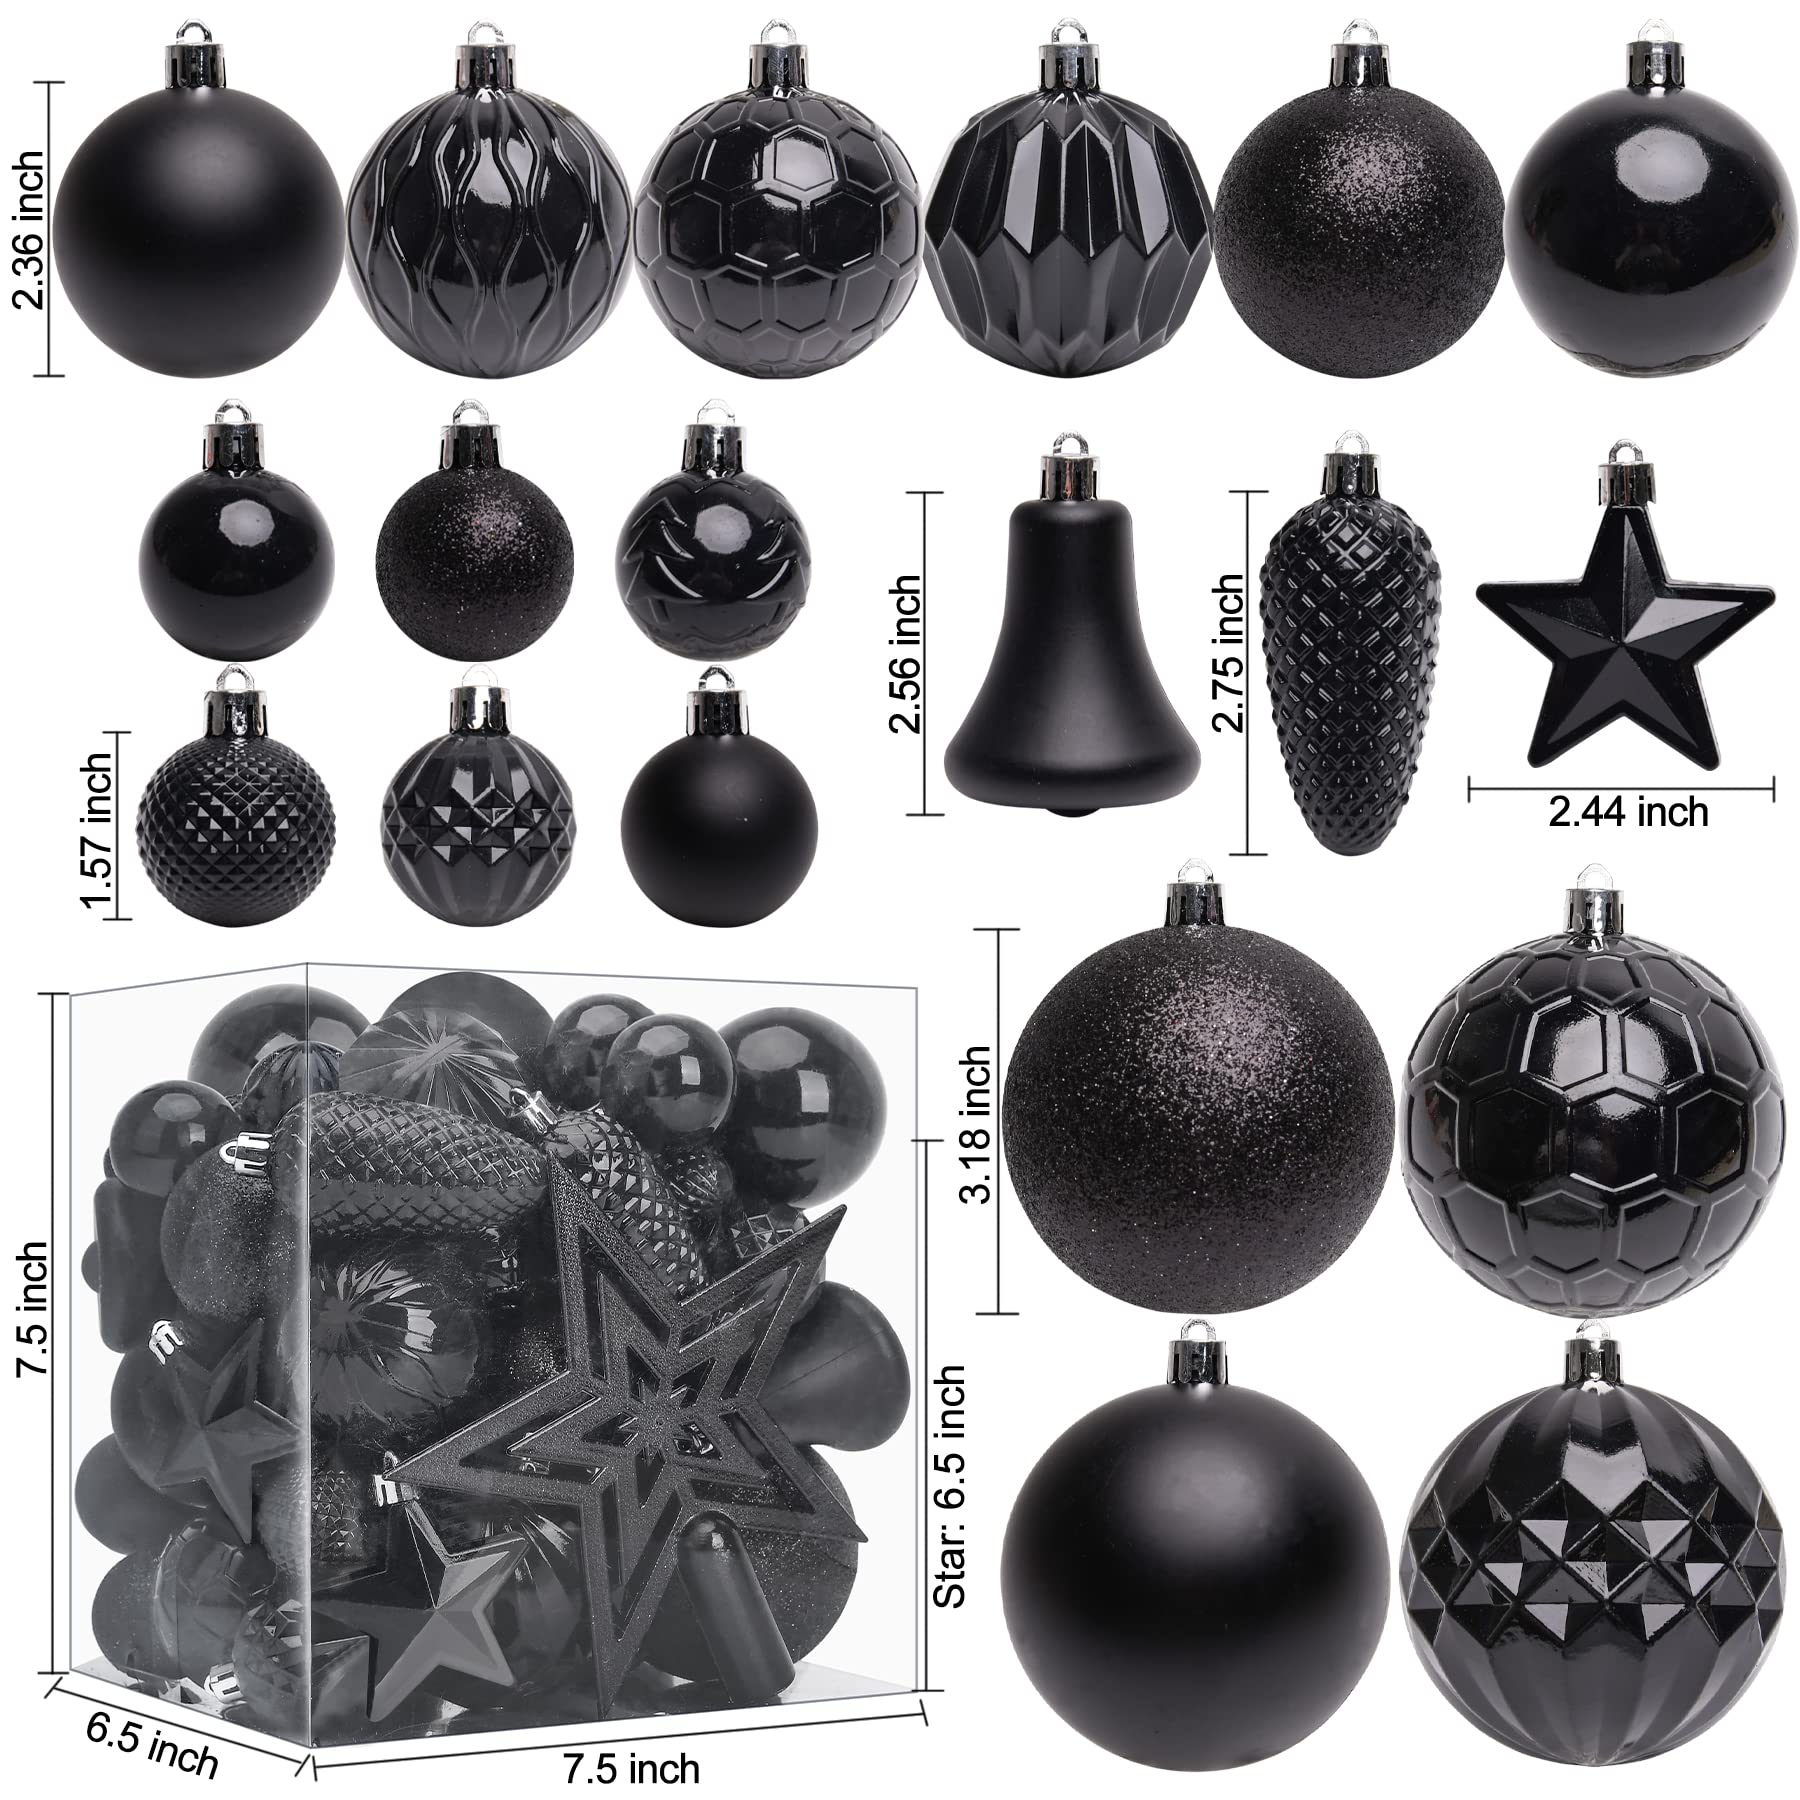 Black Ornaments Christmas Tree Decorations - 45pcs Shatterproof Christmas Ornaments Set Assorted Christmas Ornaments Decor Baubles Plastic, Multi Size